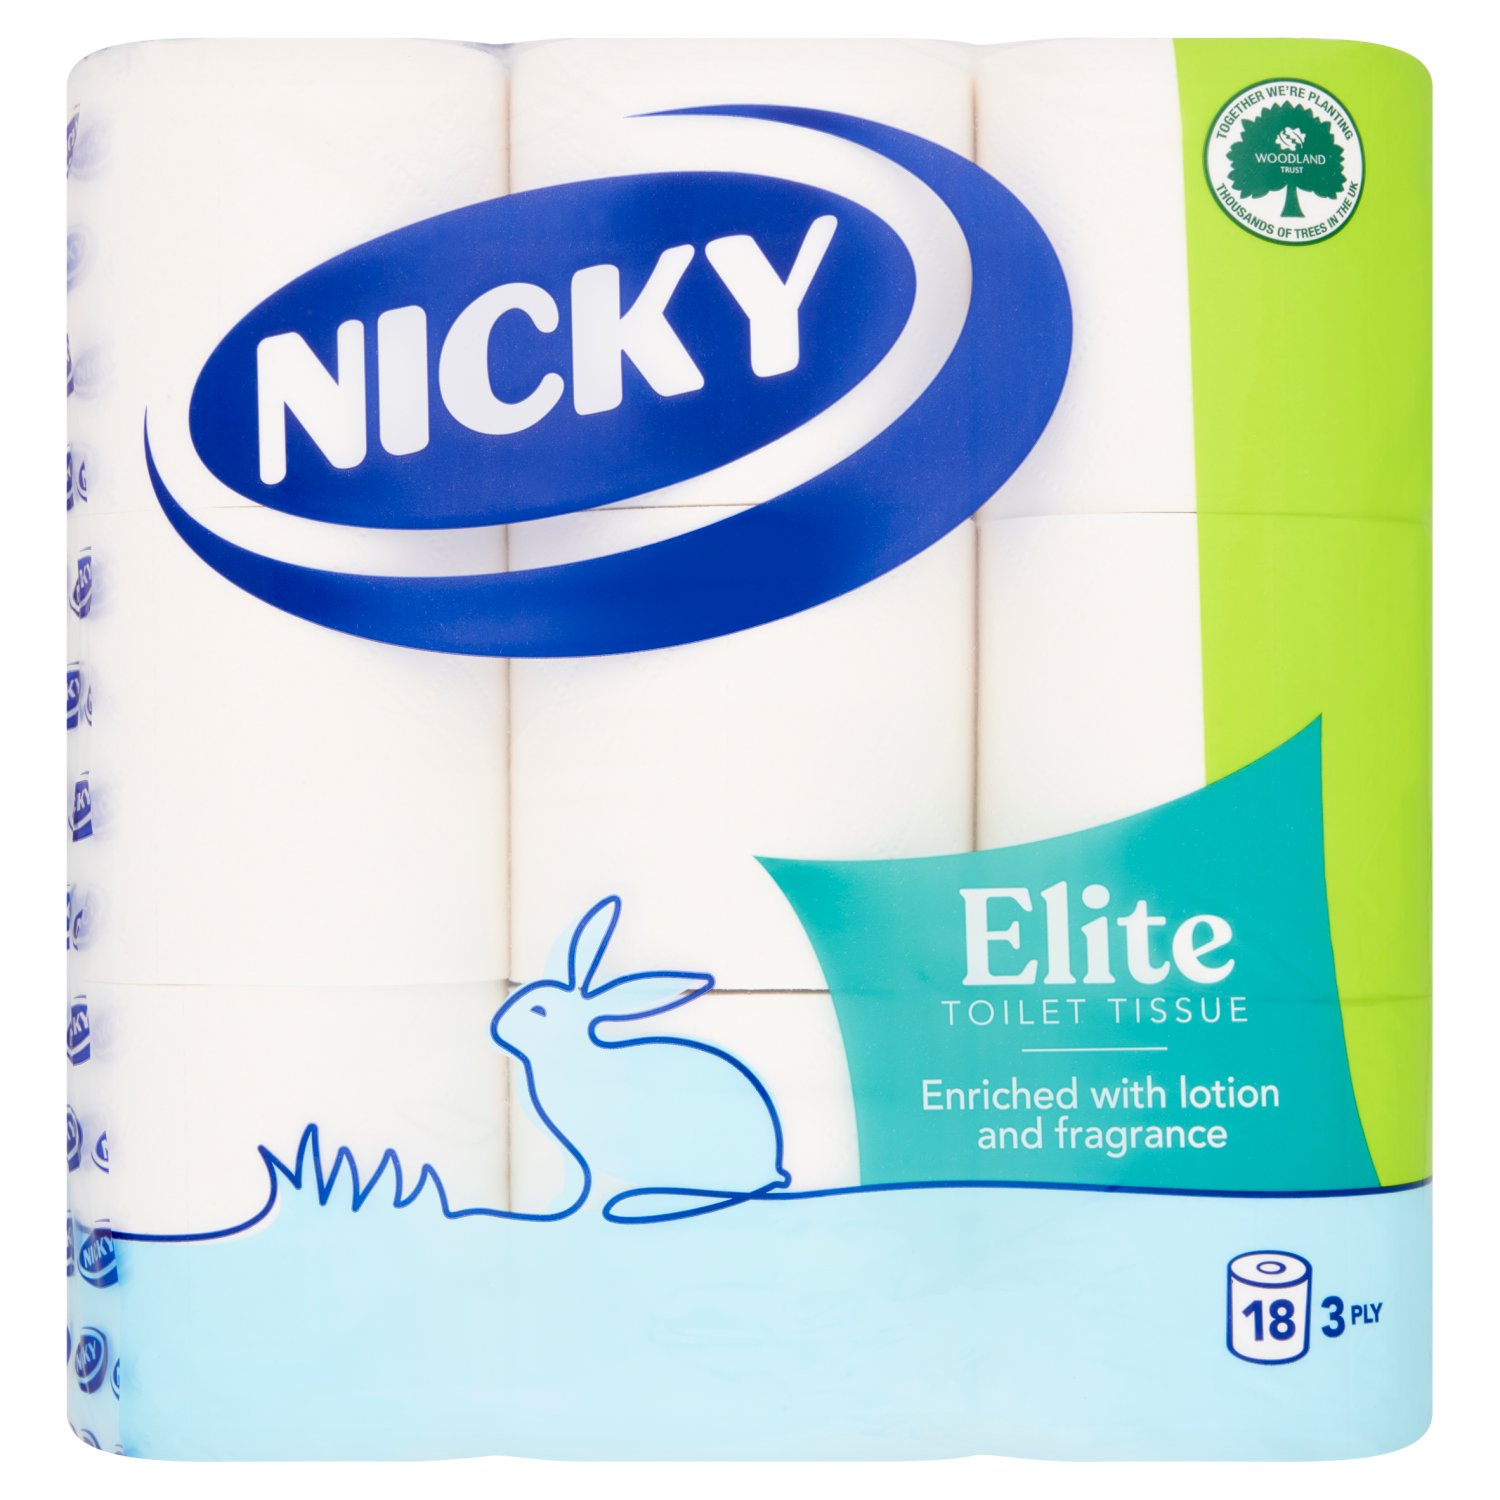 Nicky Elite Toilet Tissue 18 Roll (18 Roll)